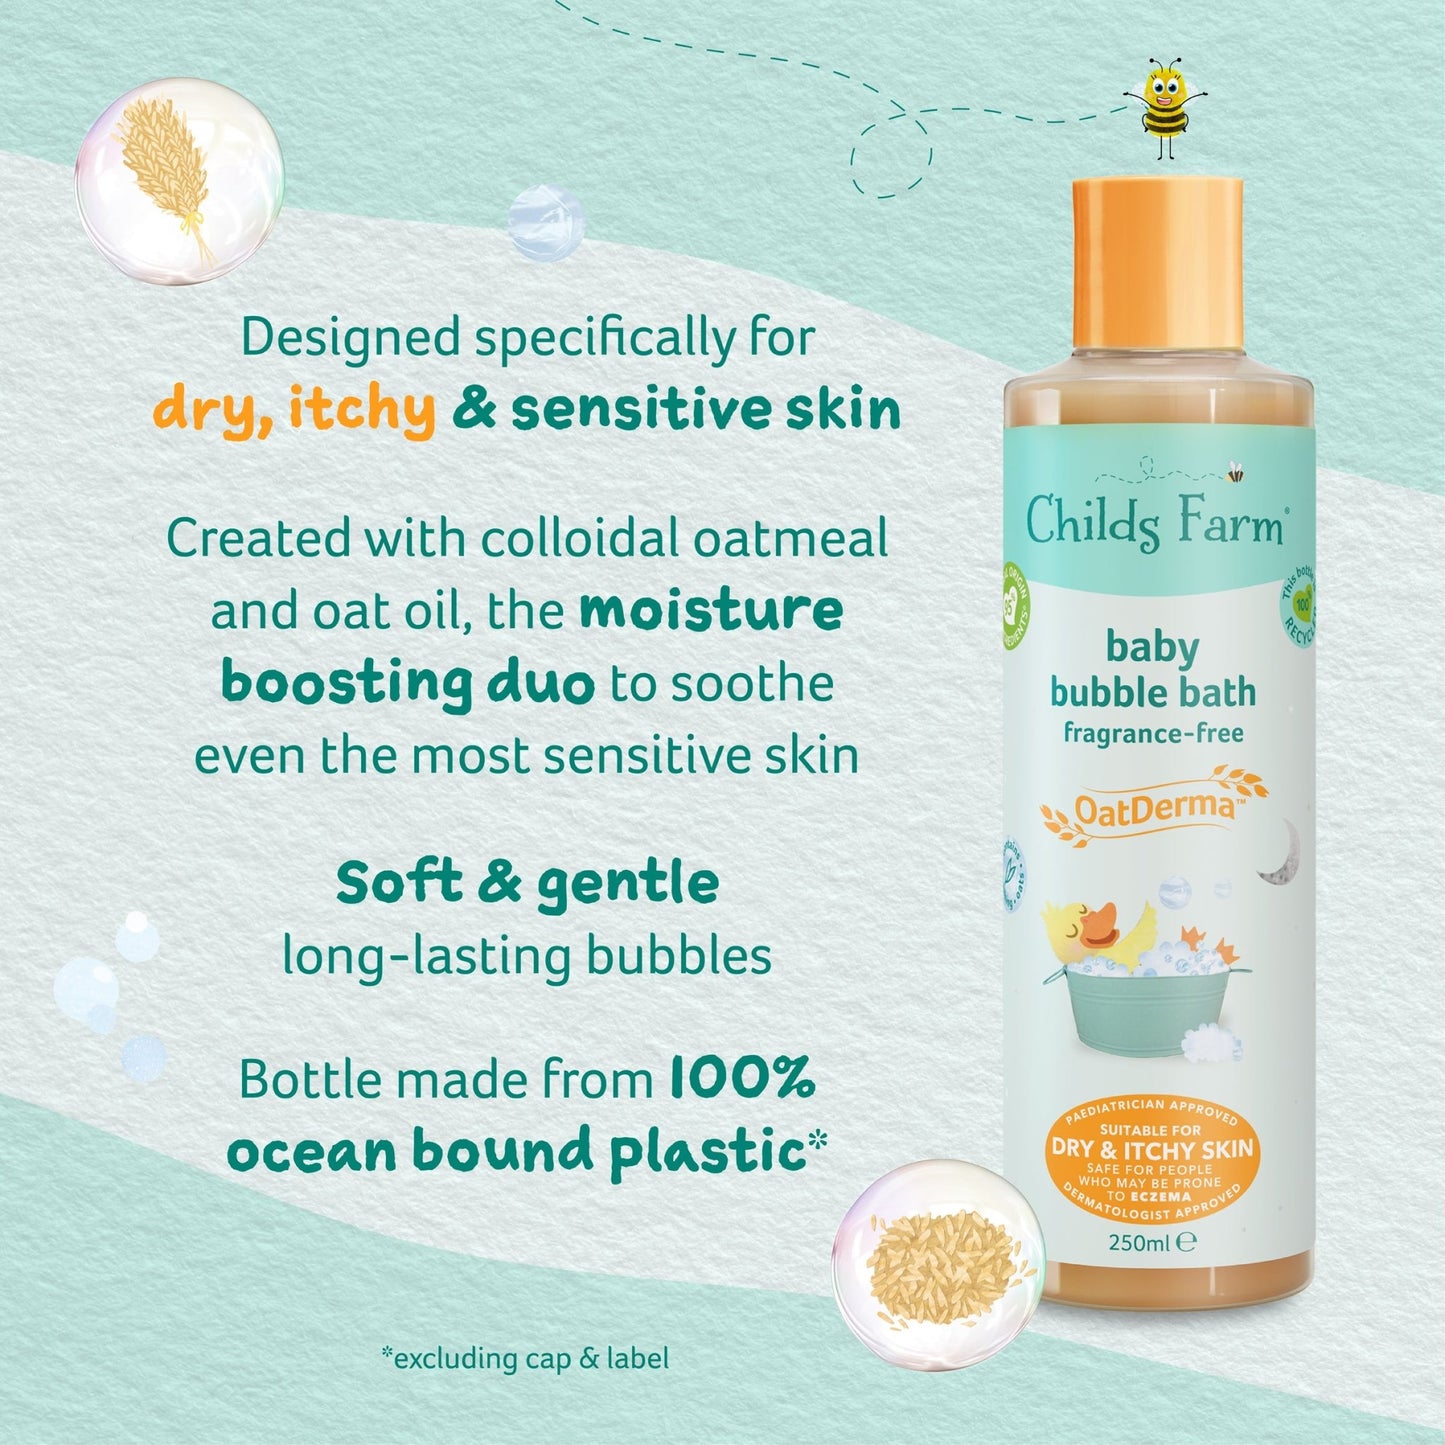 [STAFF] OatDerma™ baby bubble bath fragrance-free